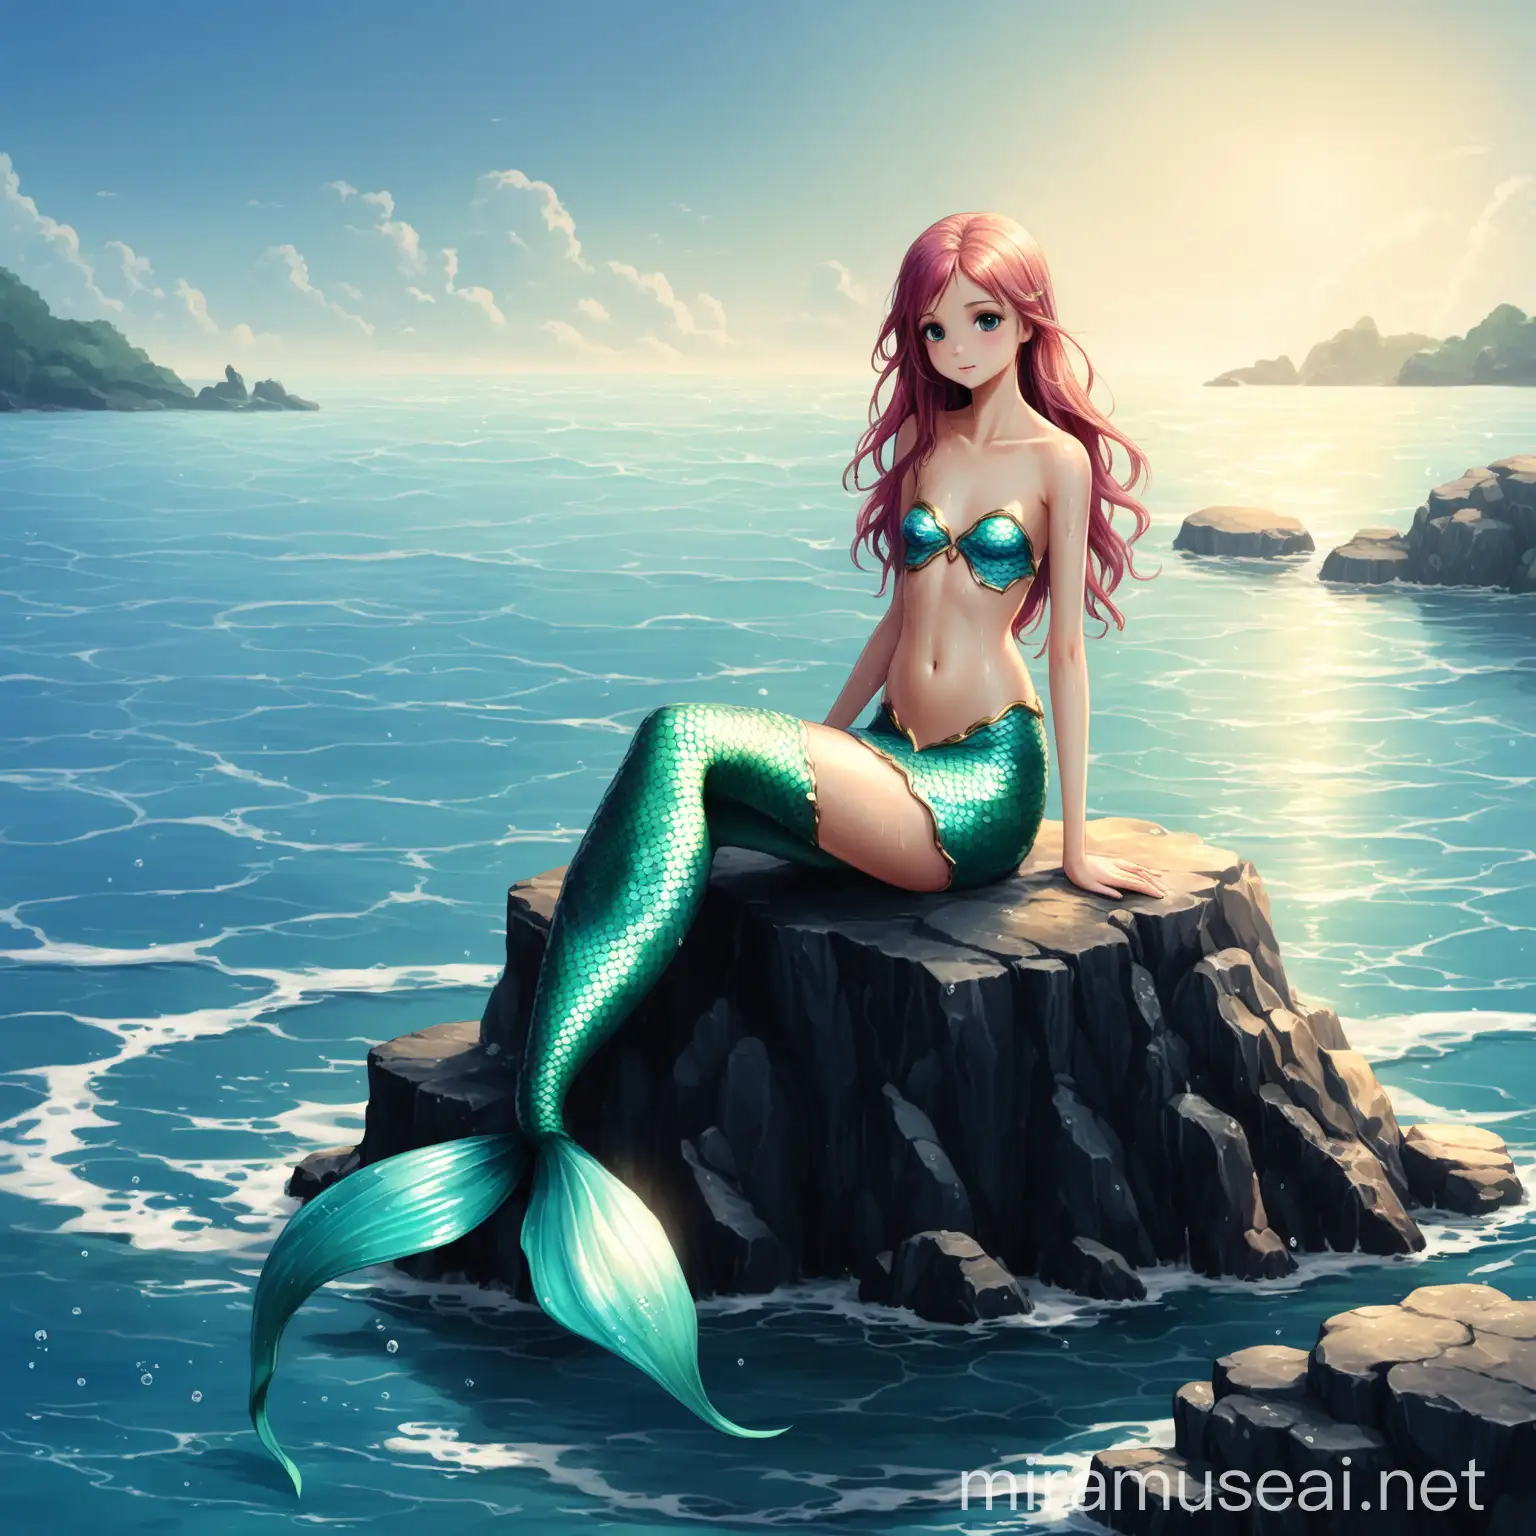 Fullbody, girl, mermaid, adult, flat small chest, thin, slim waist, sexy tummy, sea background, sitting on a rock, wet